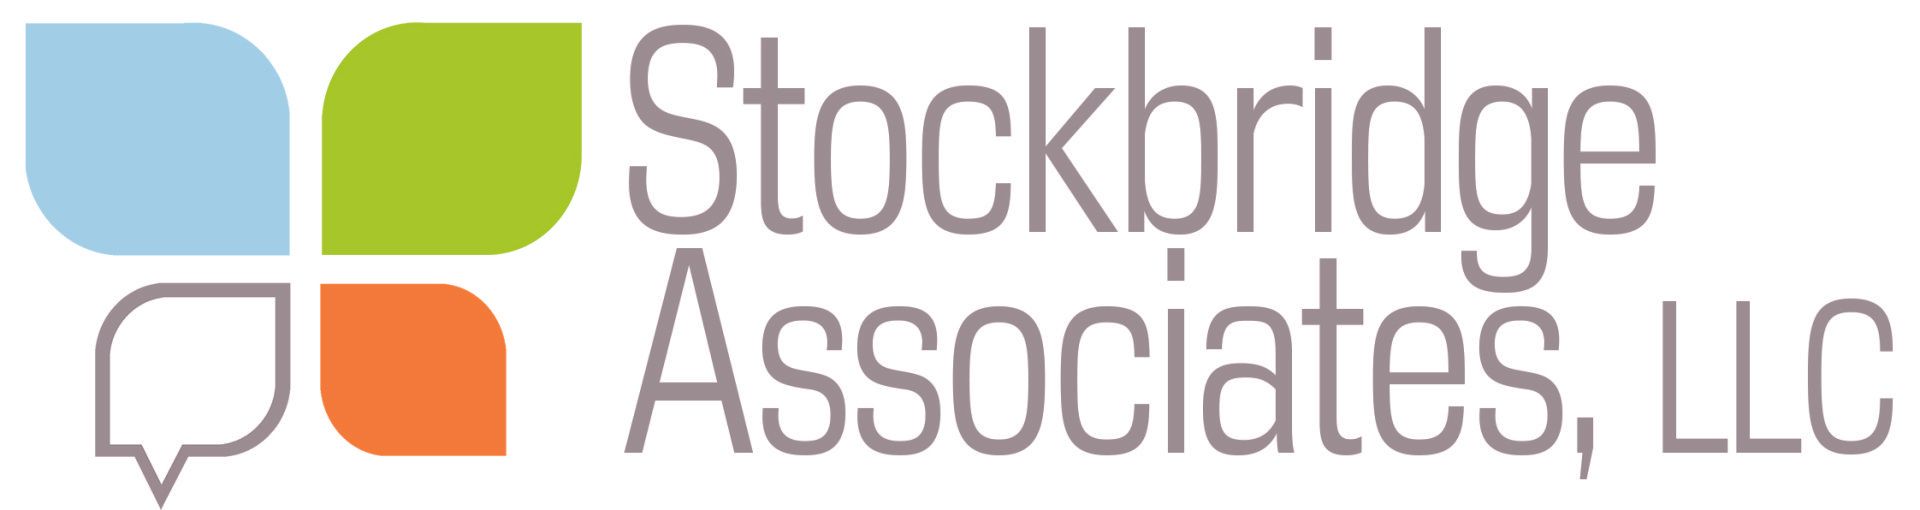 Stockbridge Associates : Website and Branding